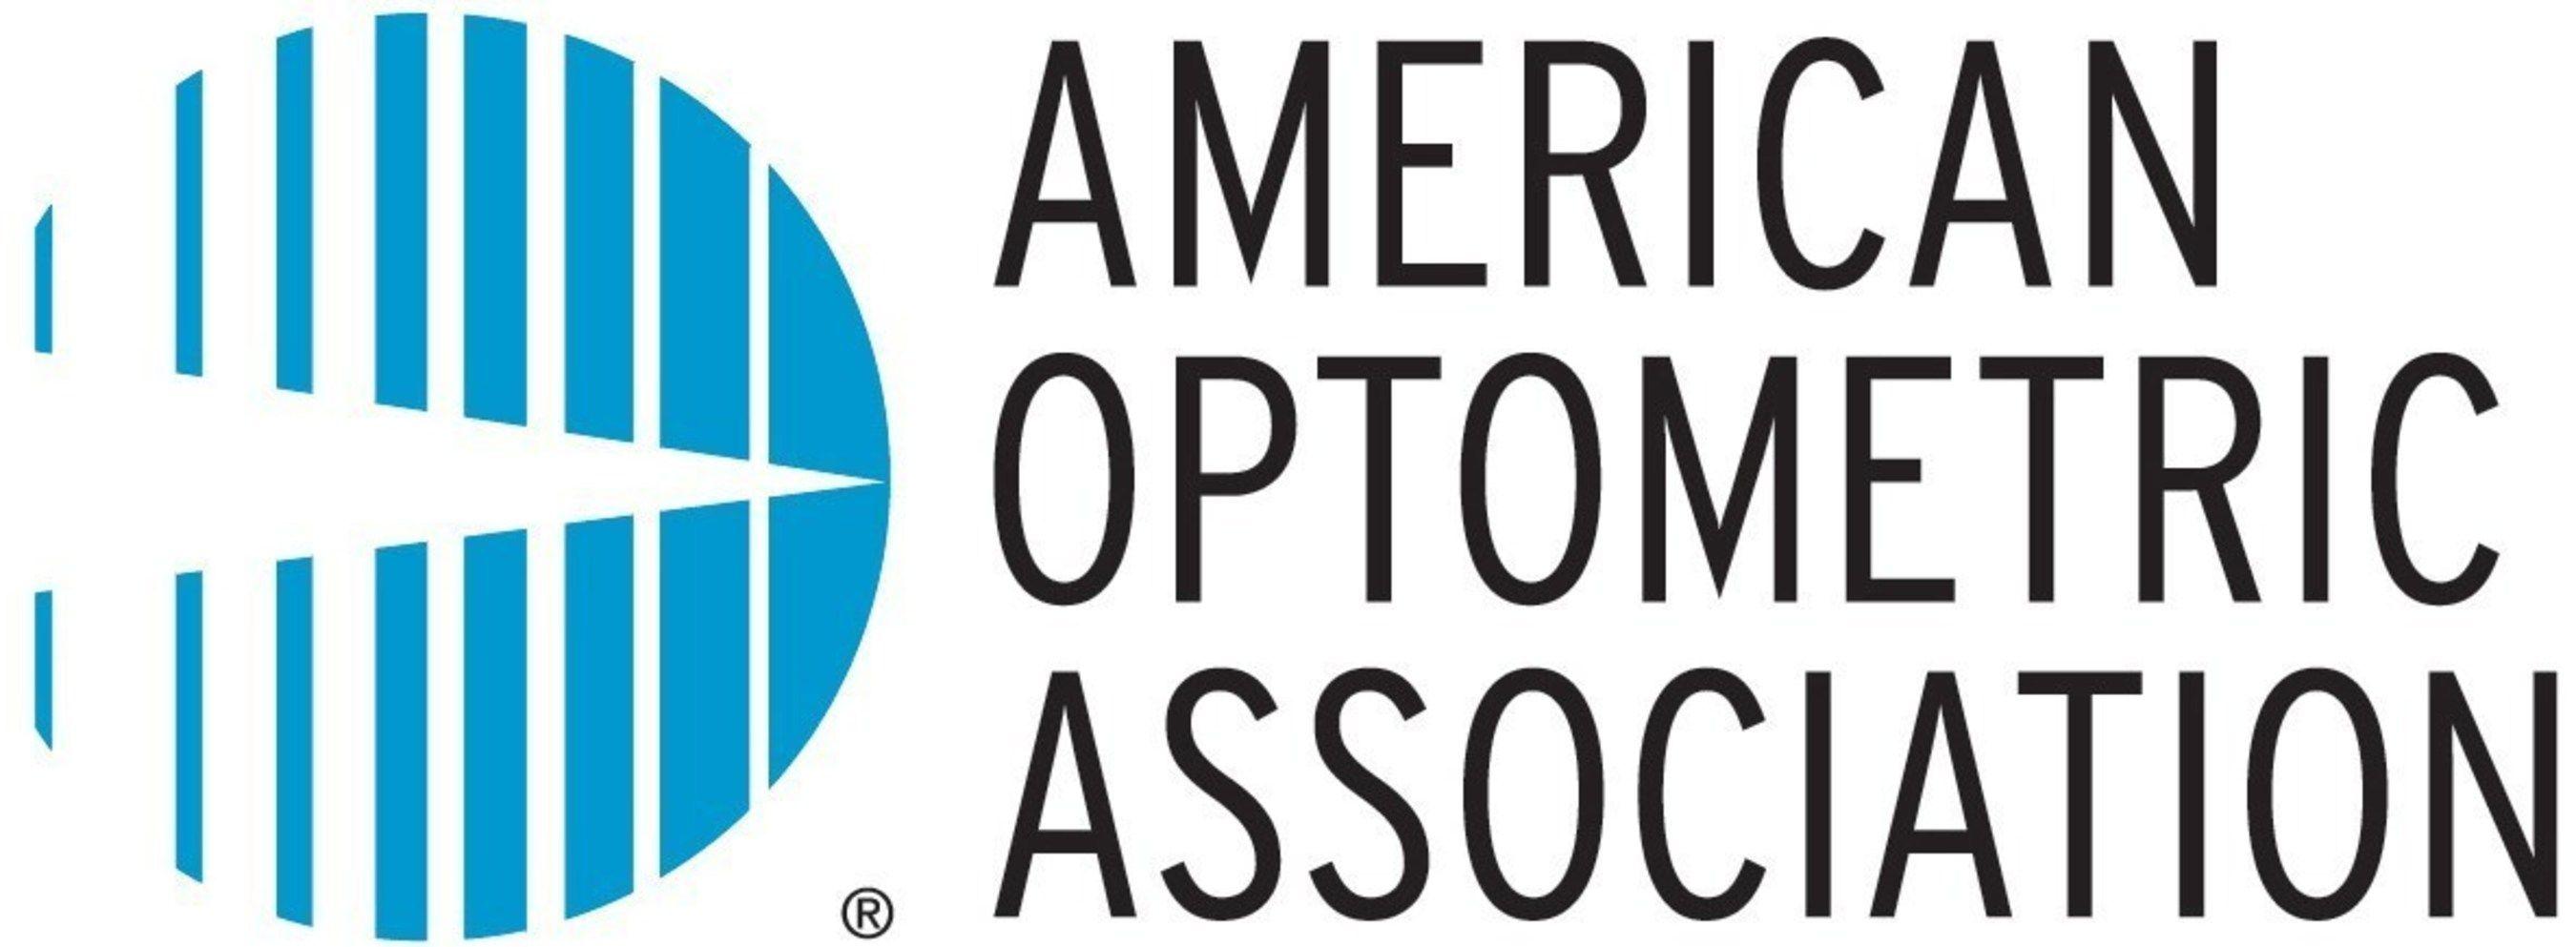 Optometric Logo - American Optometric Association Complaint Urges FDA Enforcement of ...